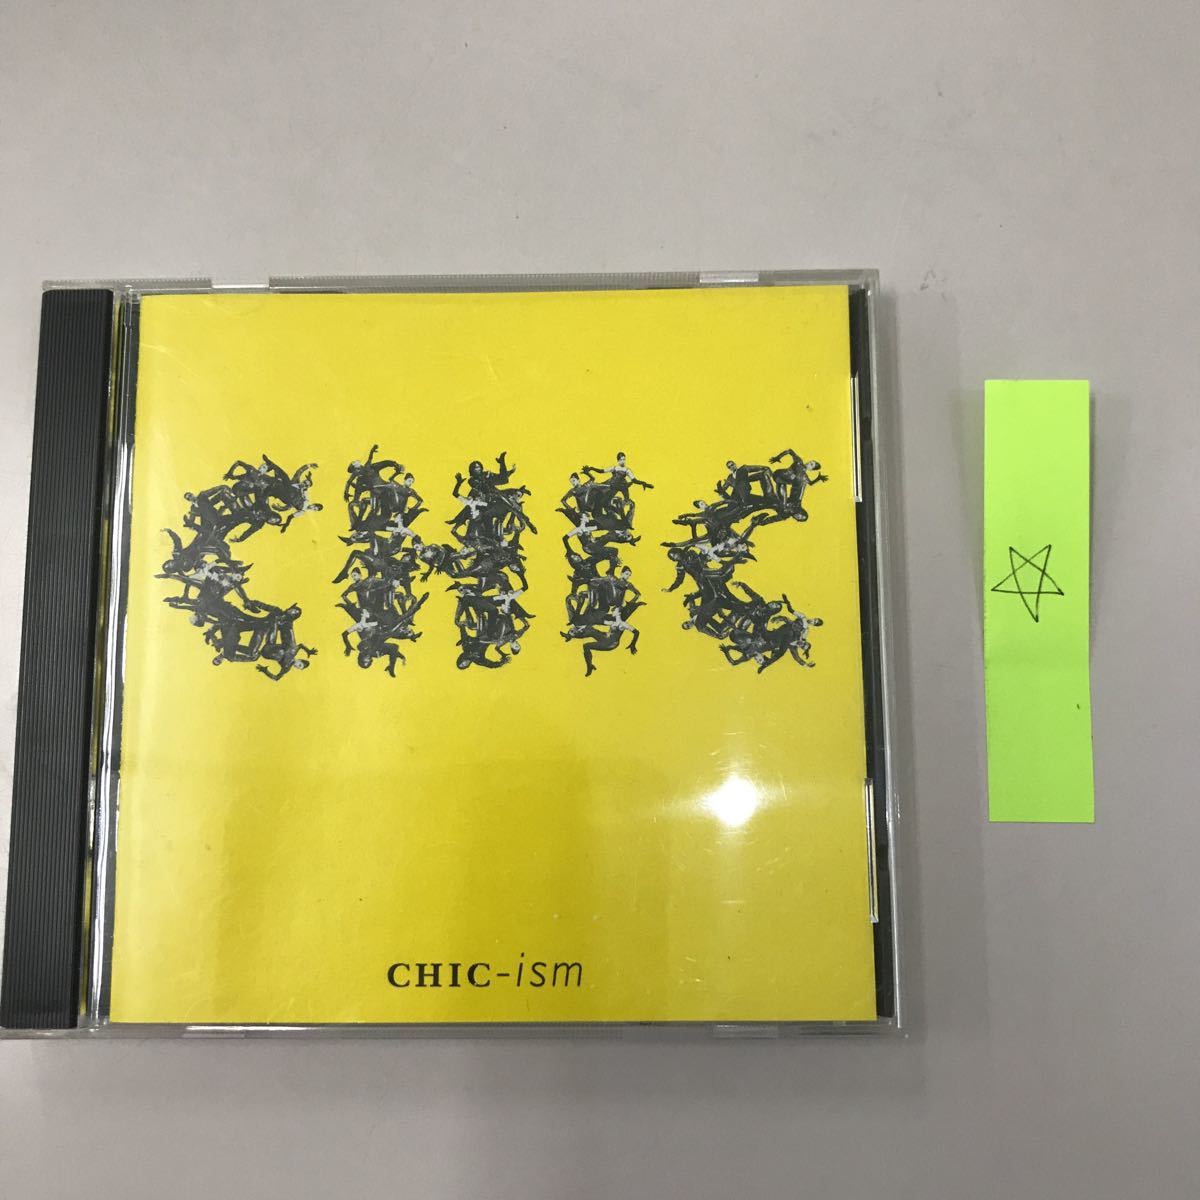 CD 輸入盤 中古 洋楽 CHIC ism おすすめ 手数料無料 長期保存品